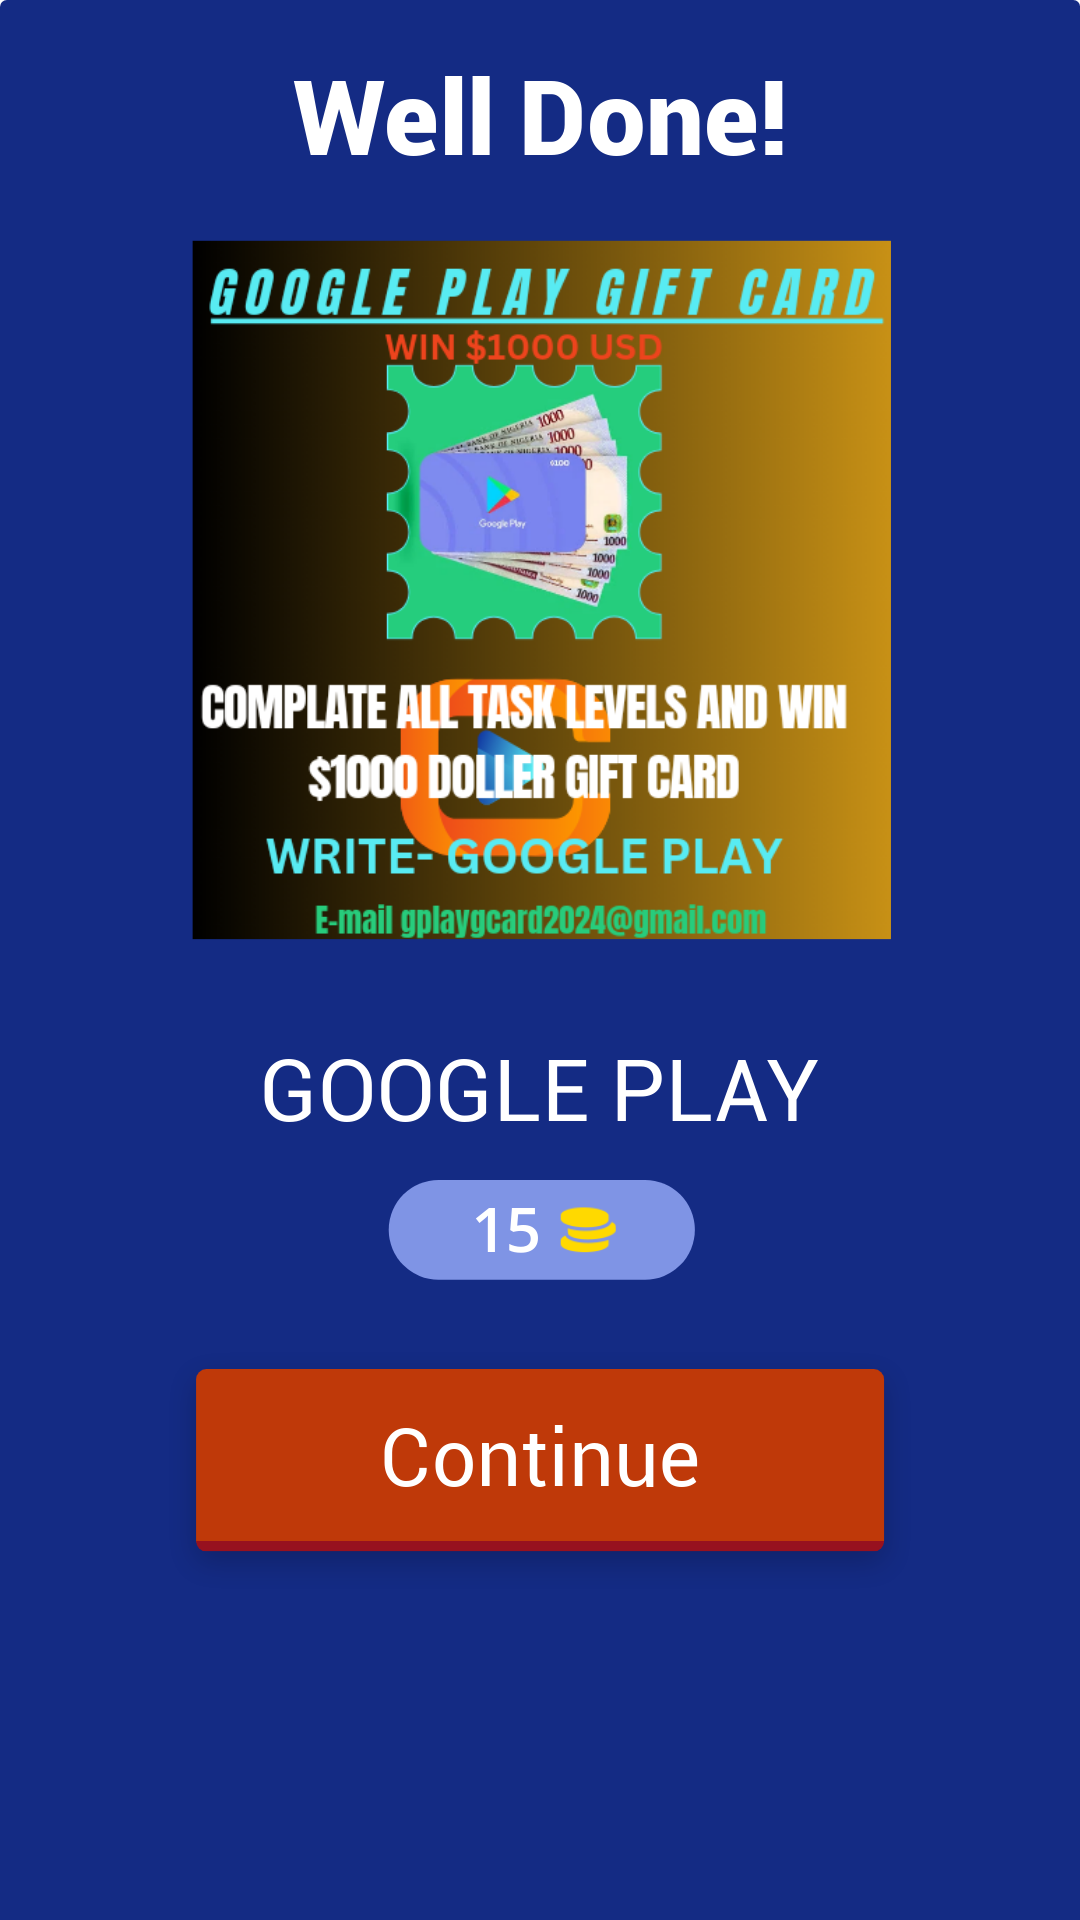 Screenshot of Google Play Gift Card 2024